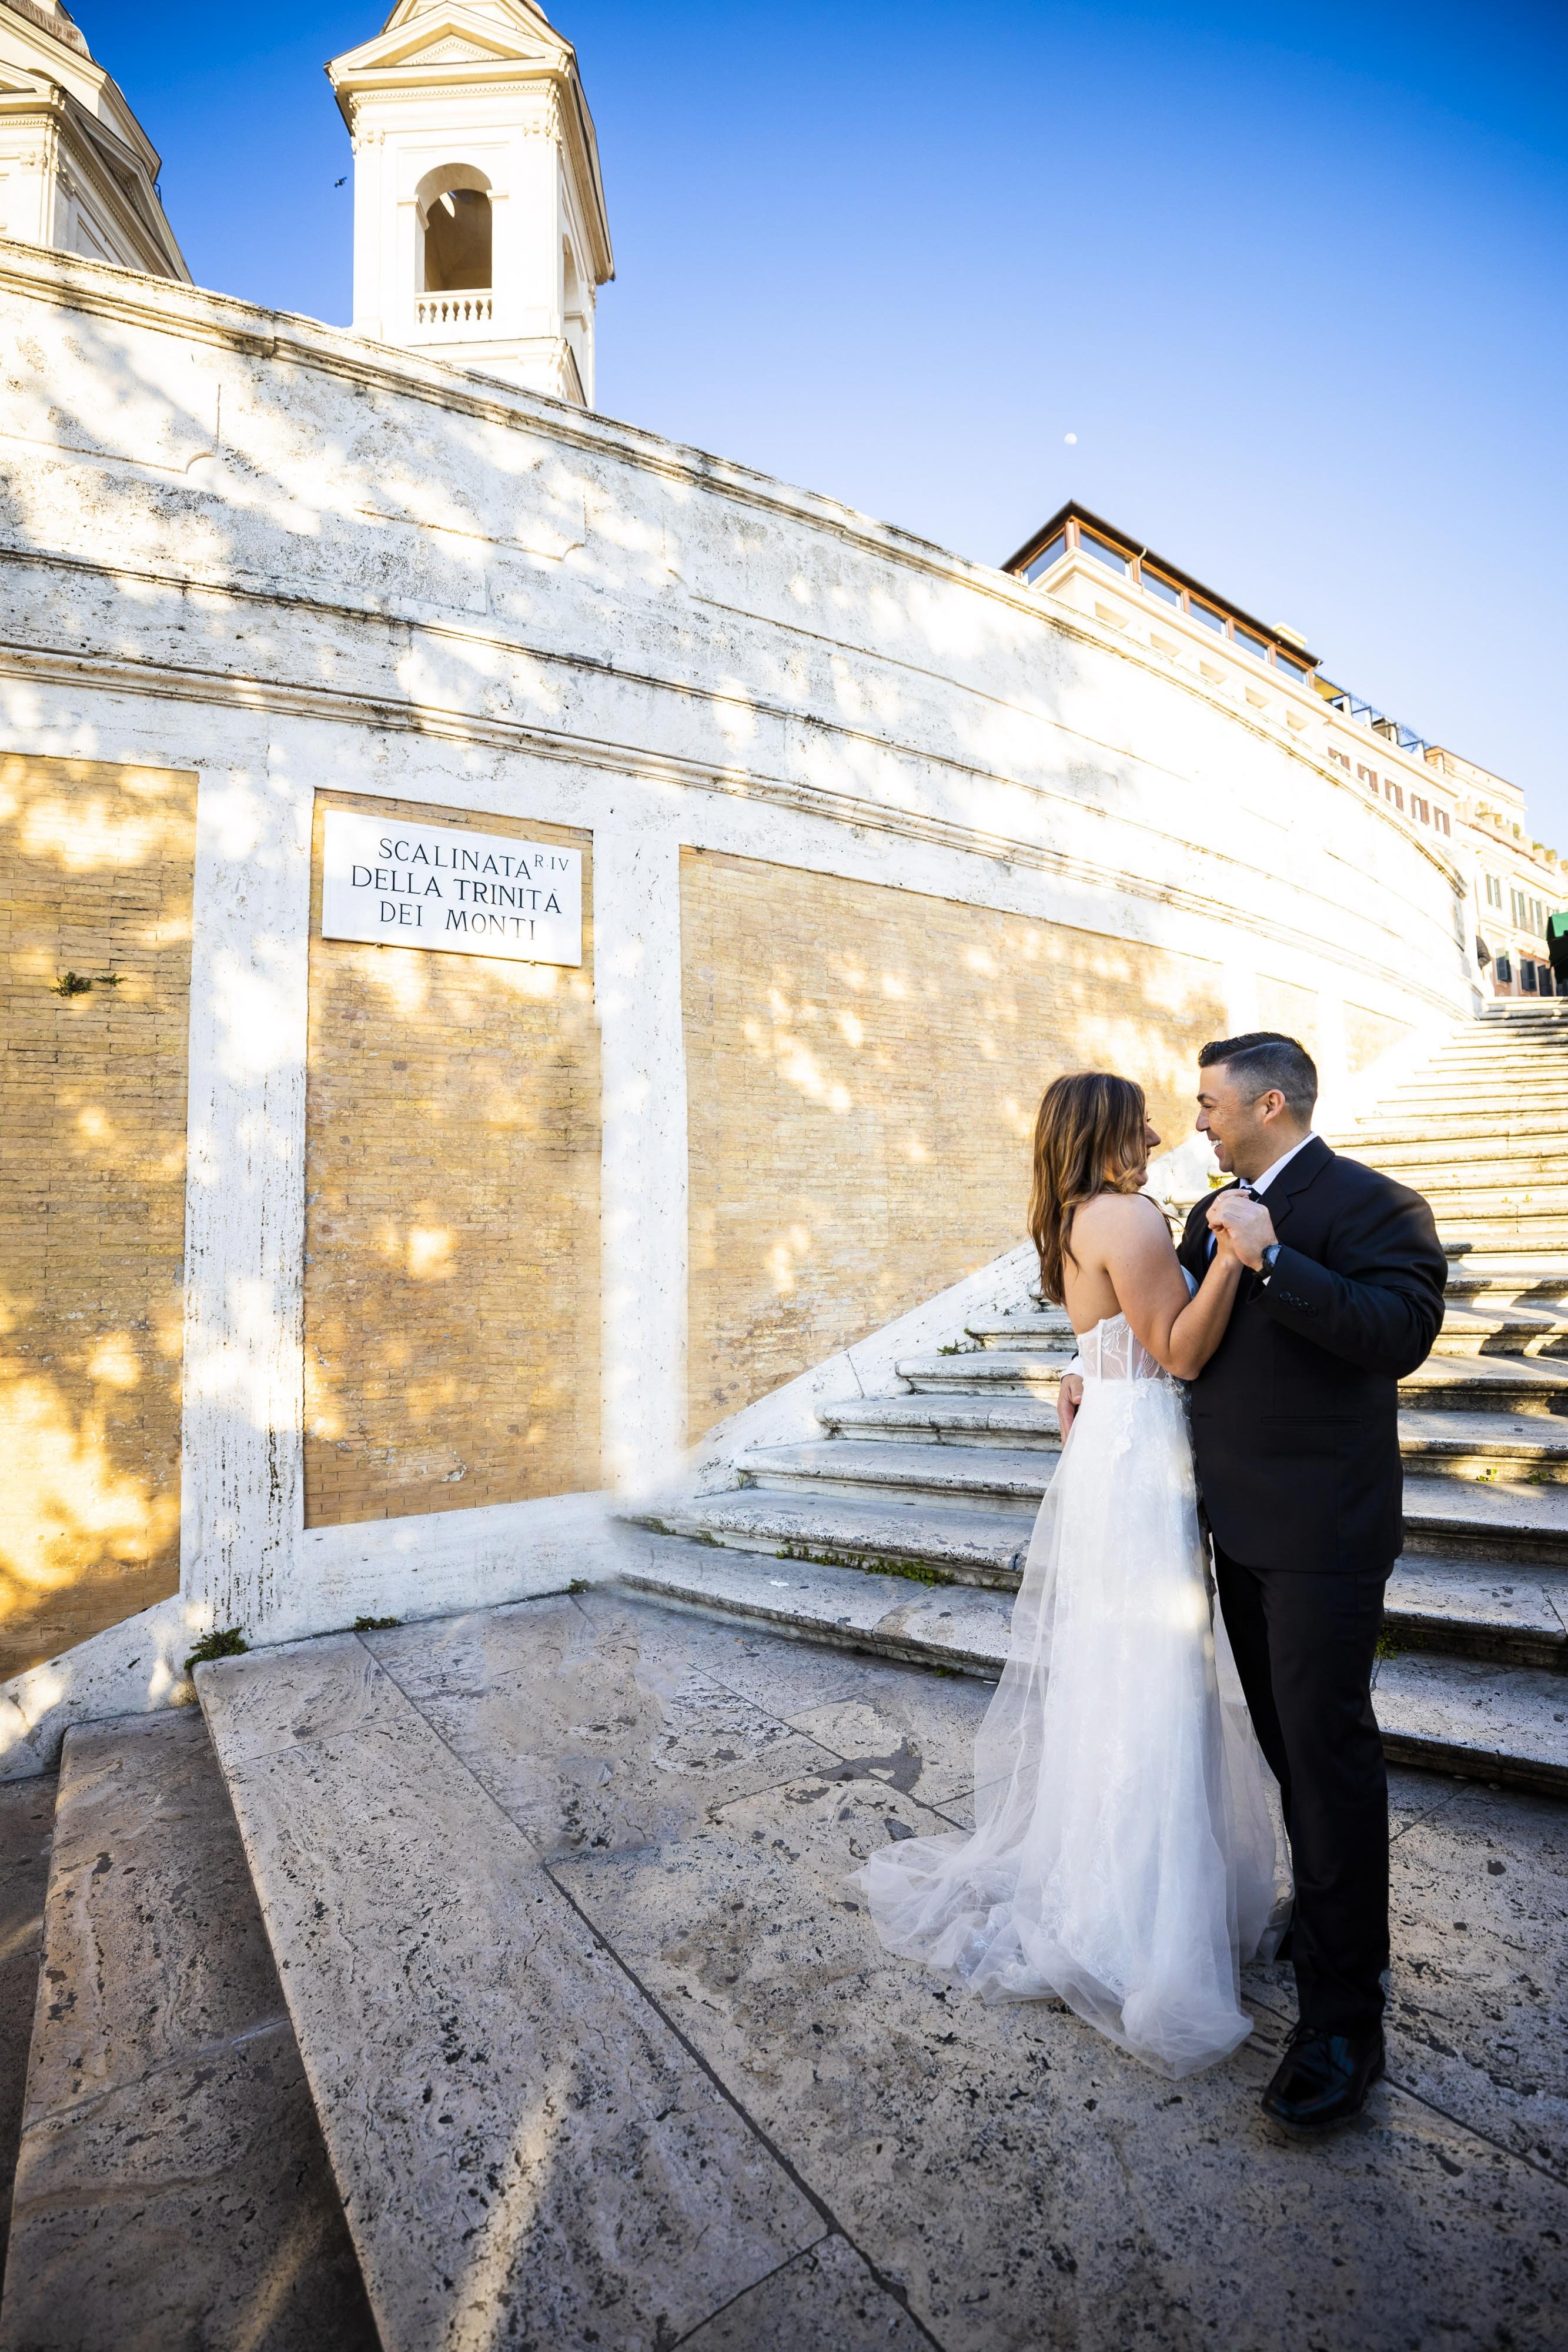 Spanish Steps wedding photos